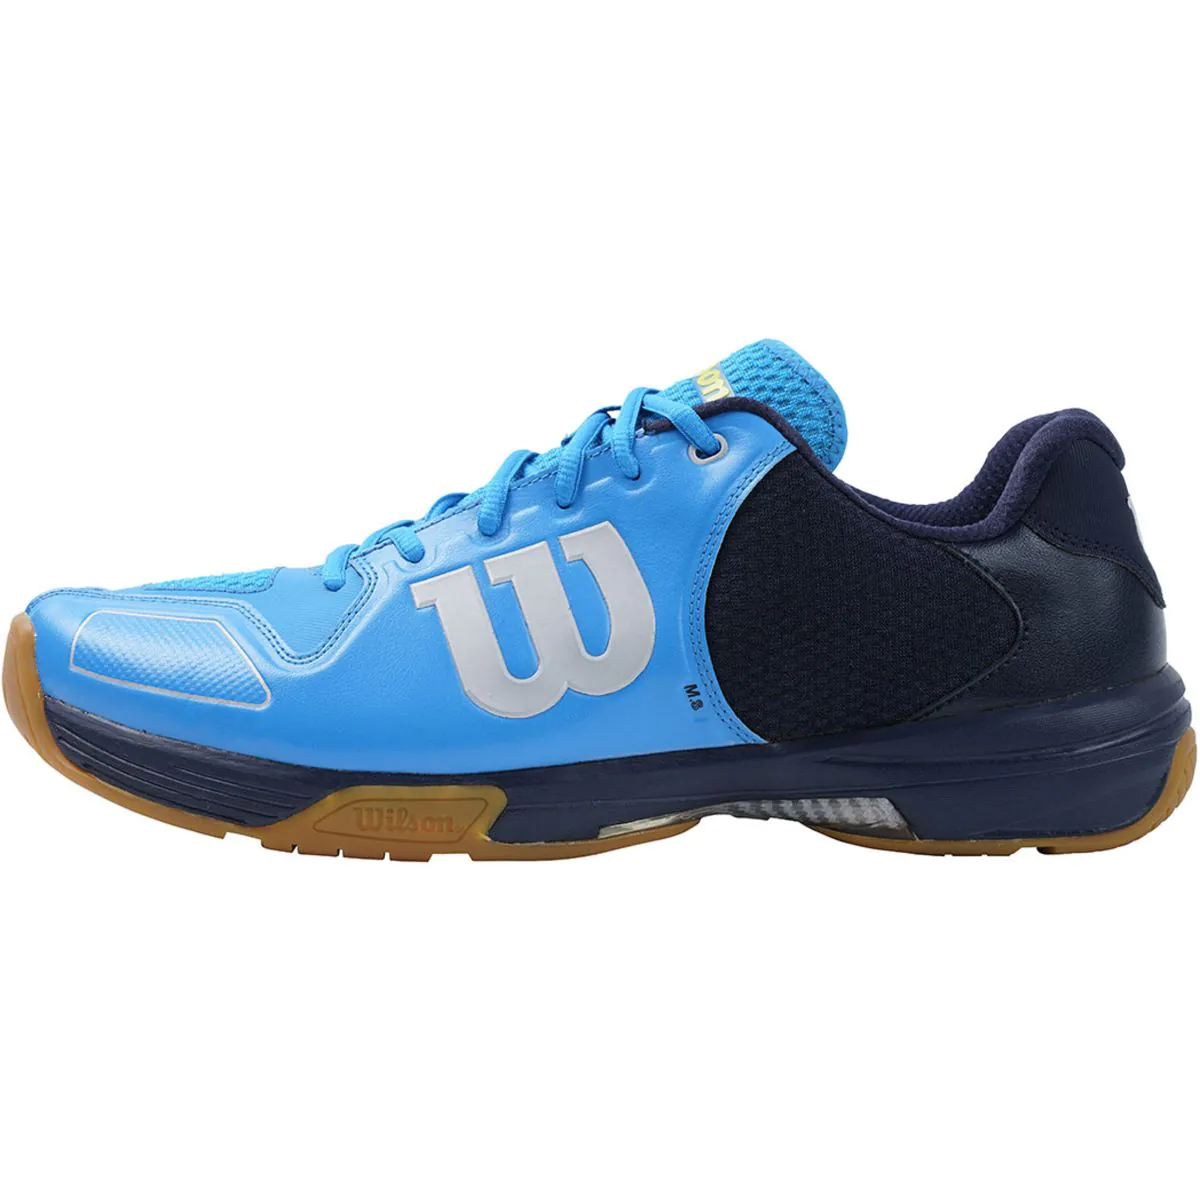 Wilson Vertex Men's Squash Shoes WRS324660